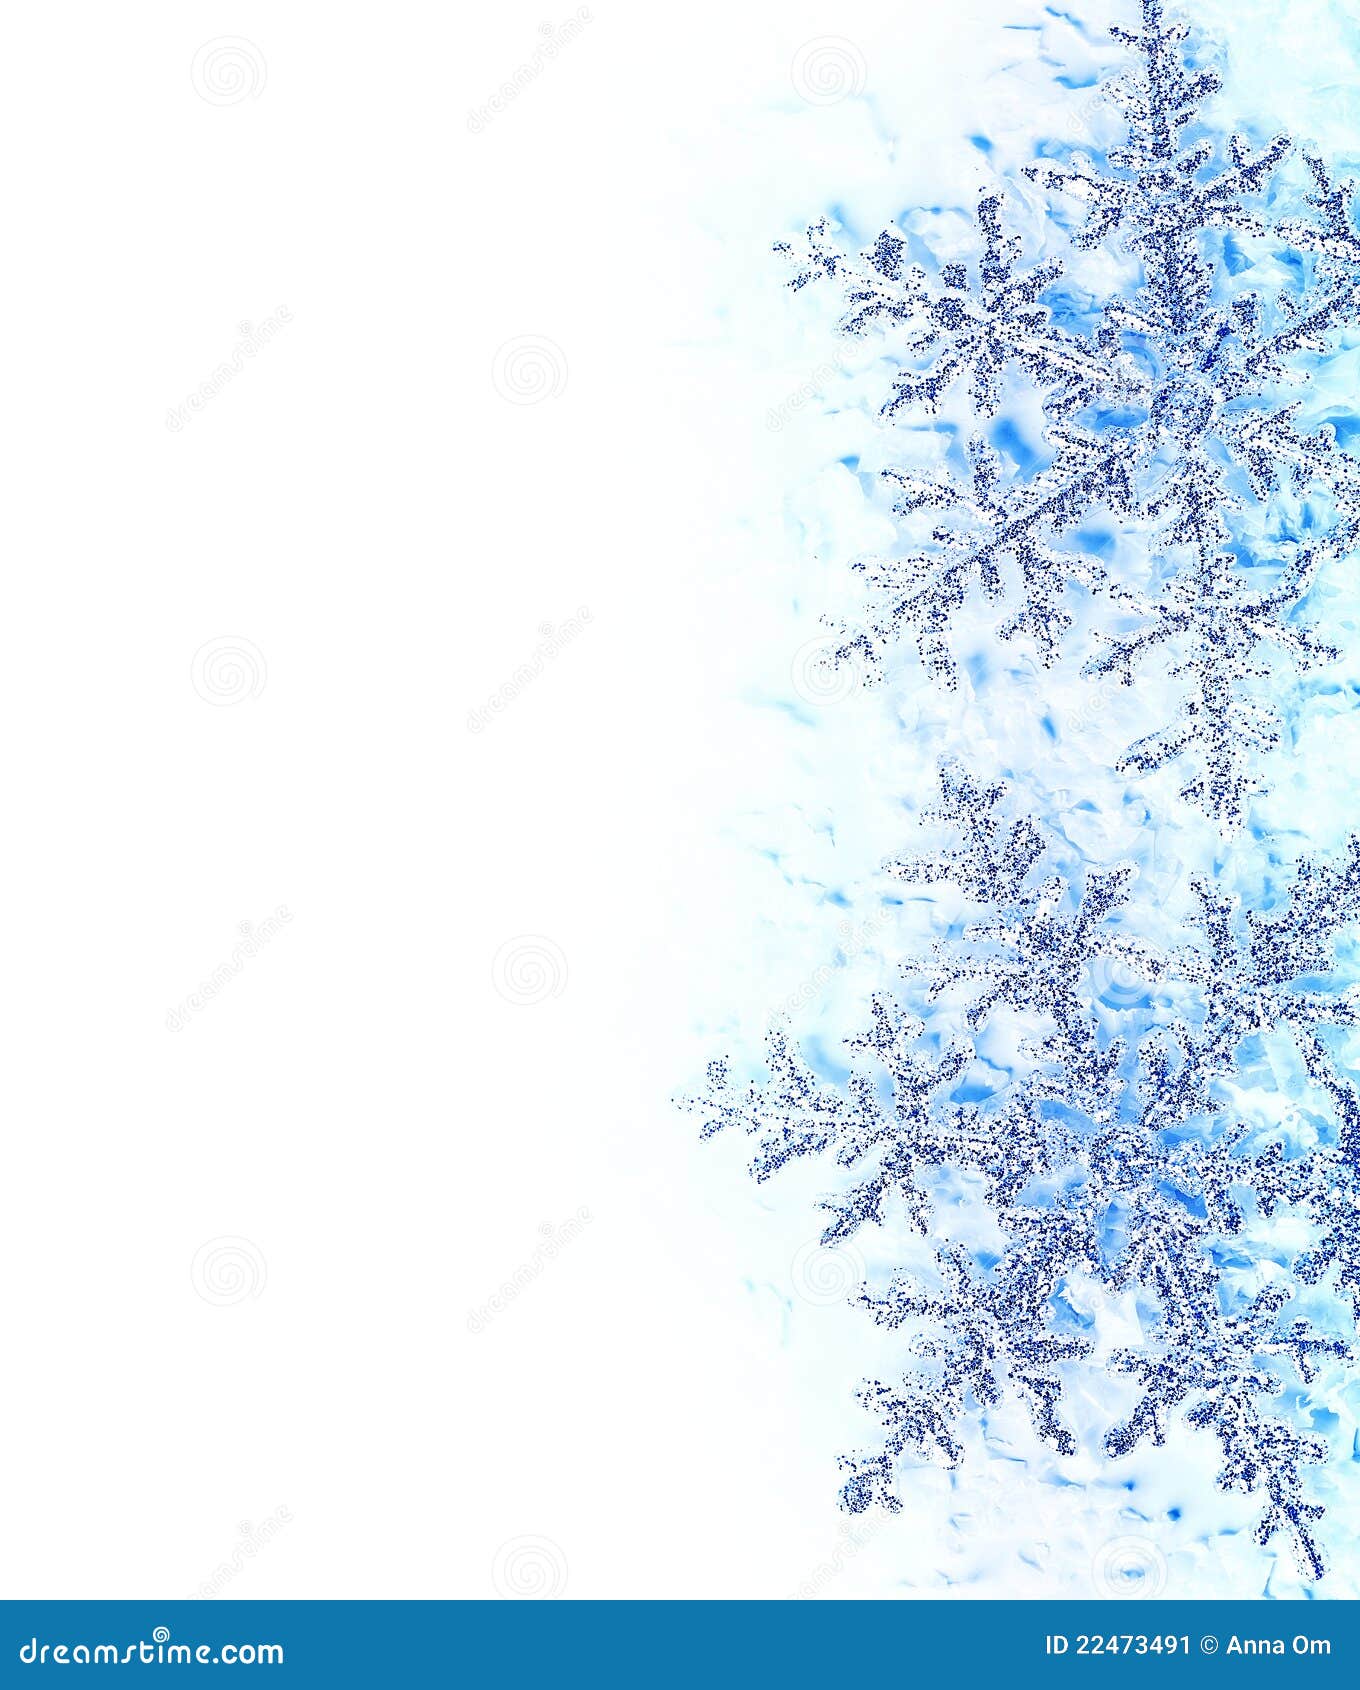 Snowflake Blue Decorative Border Stock Image - Image: 22473491